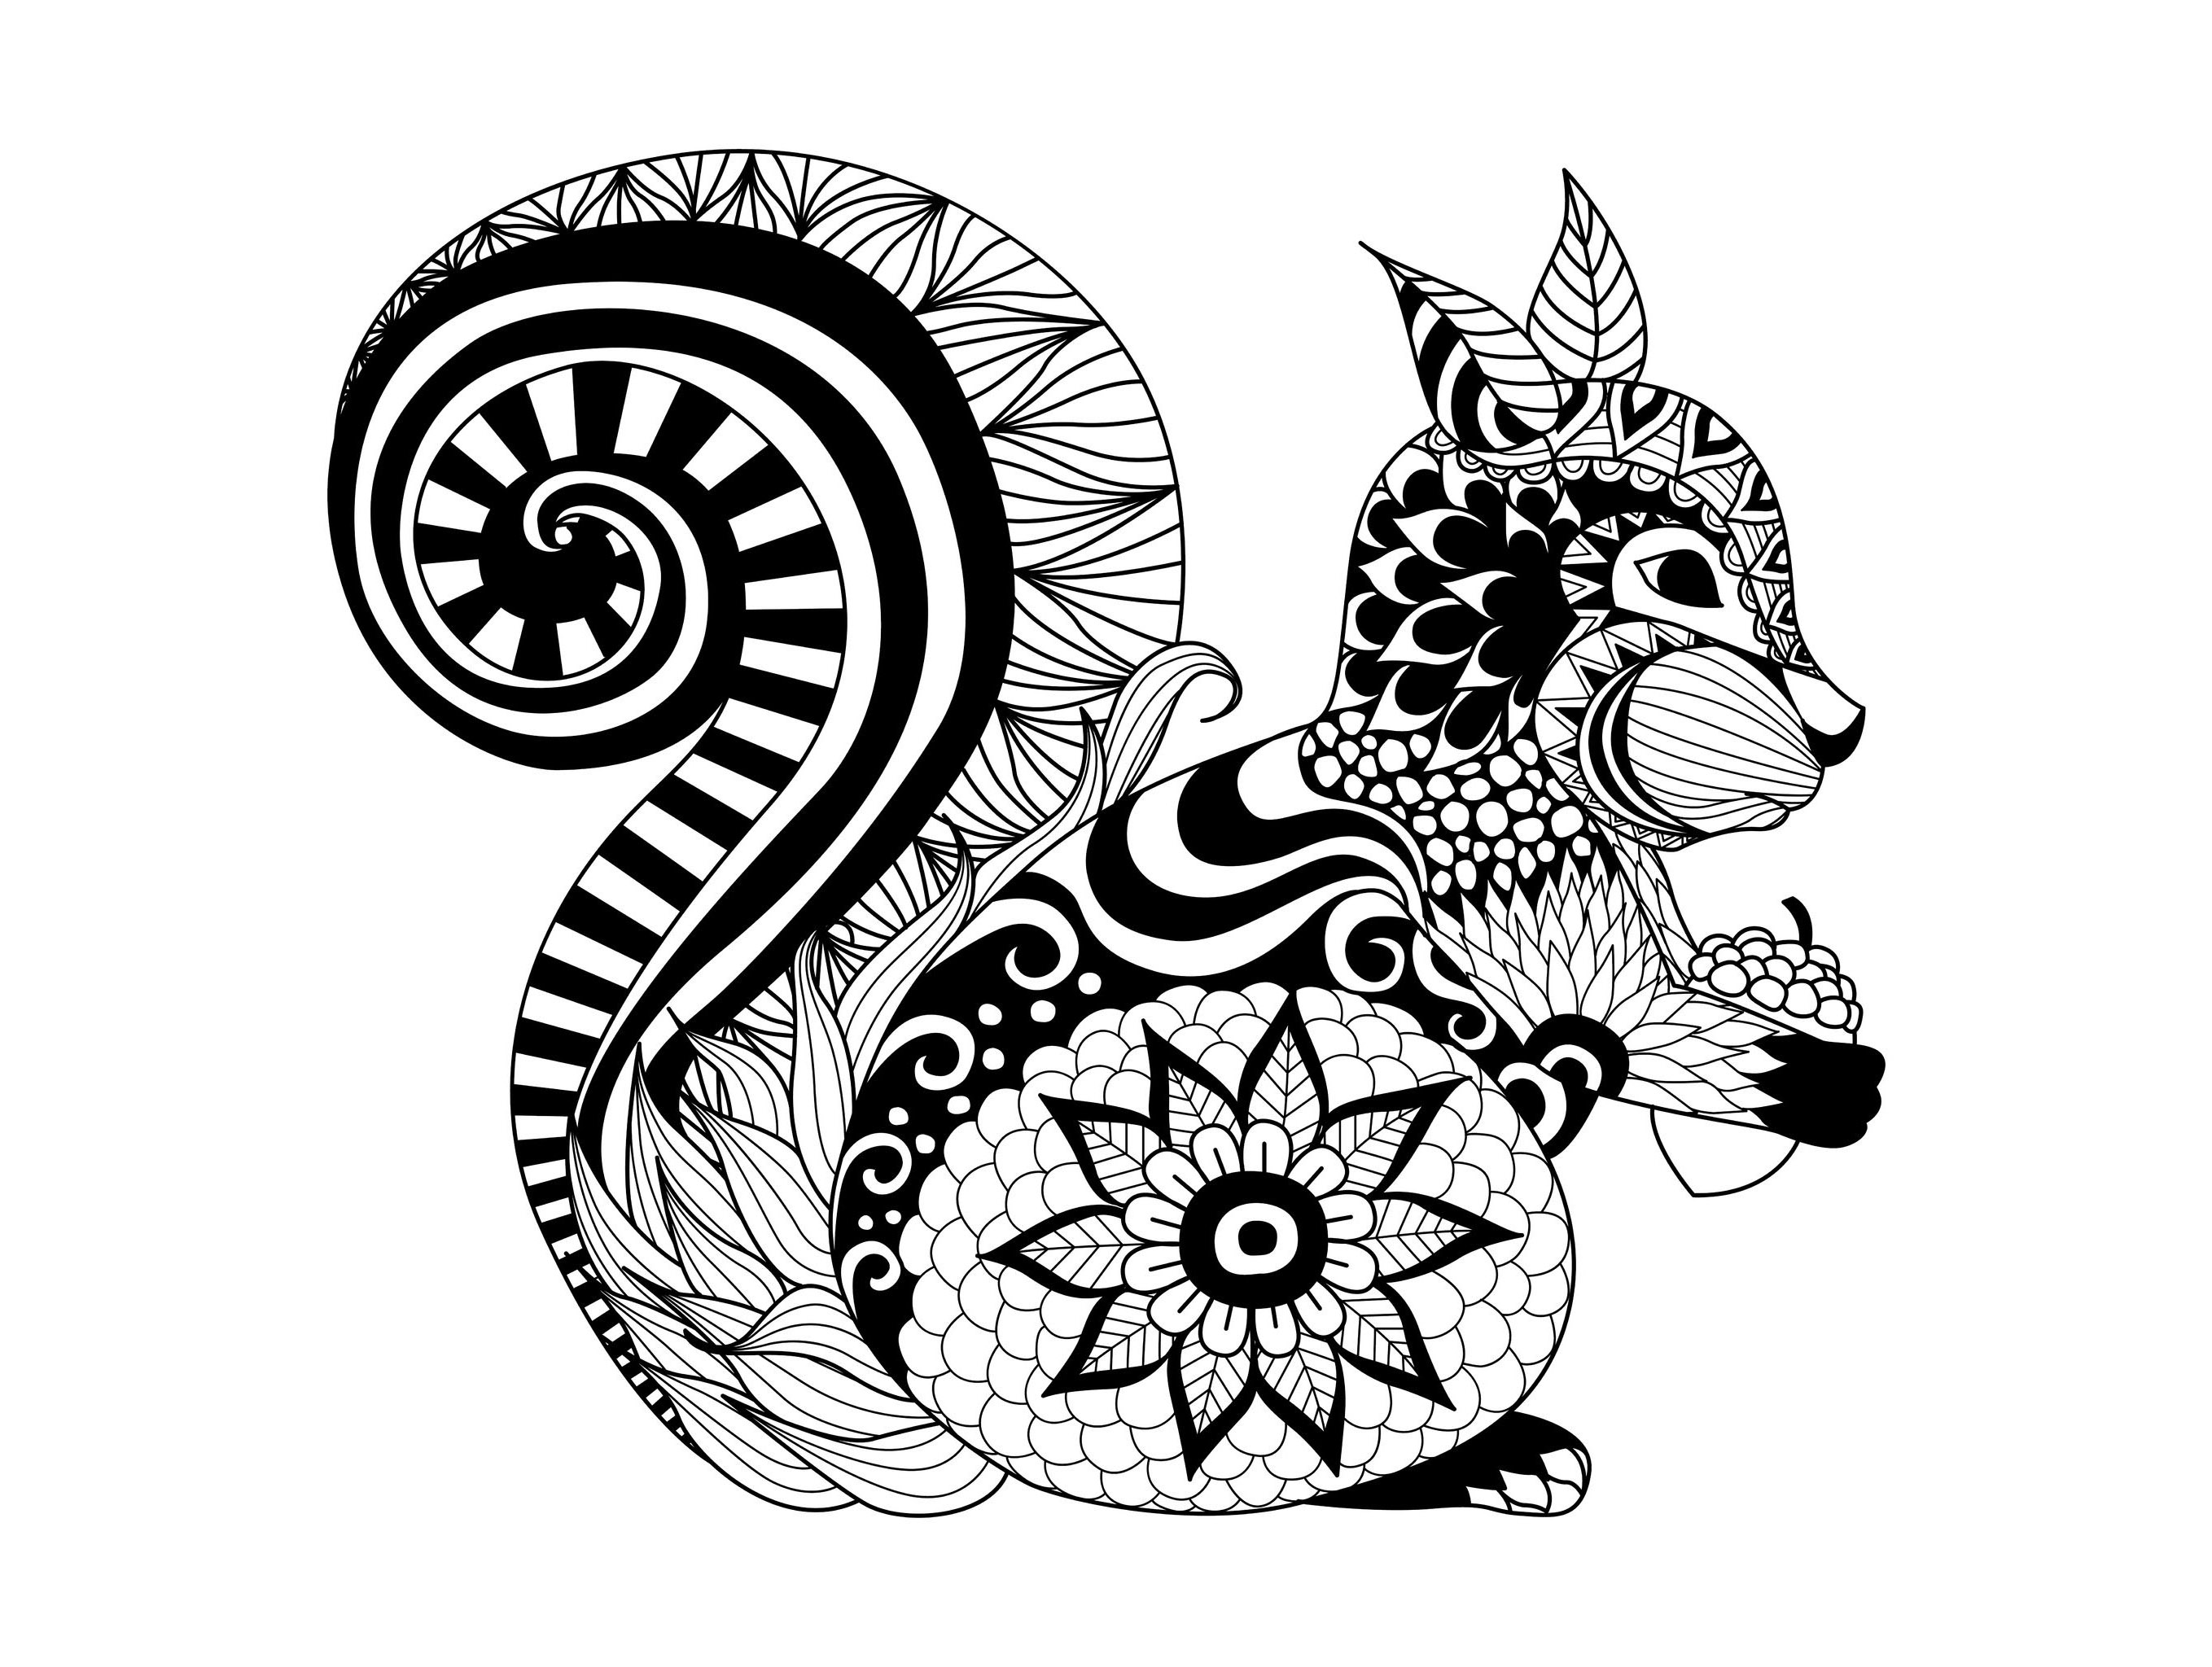 Joli écureuil   imprimer et colorier style Zentangle par Bimdeedee